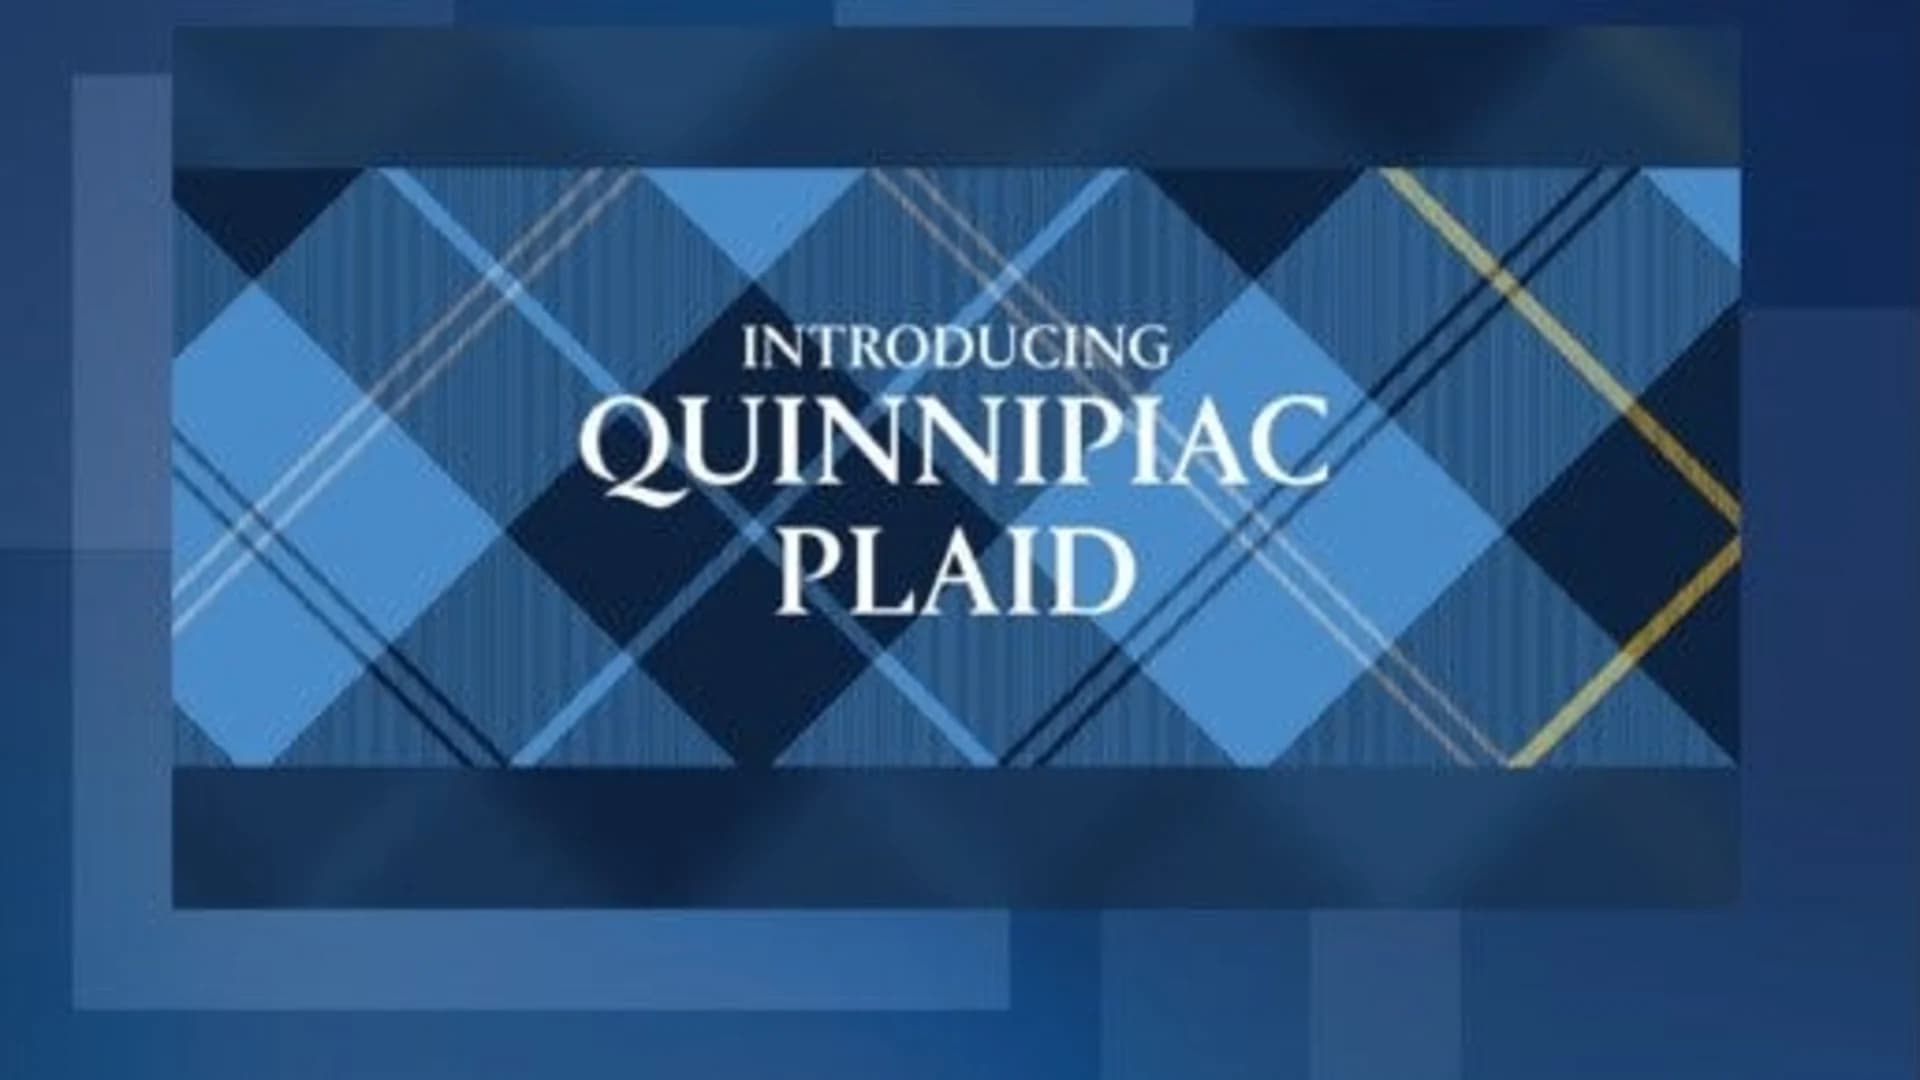 Quinnipiac University rebrands with a tartan plaid design